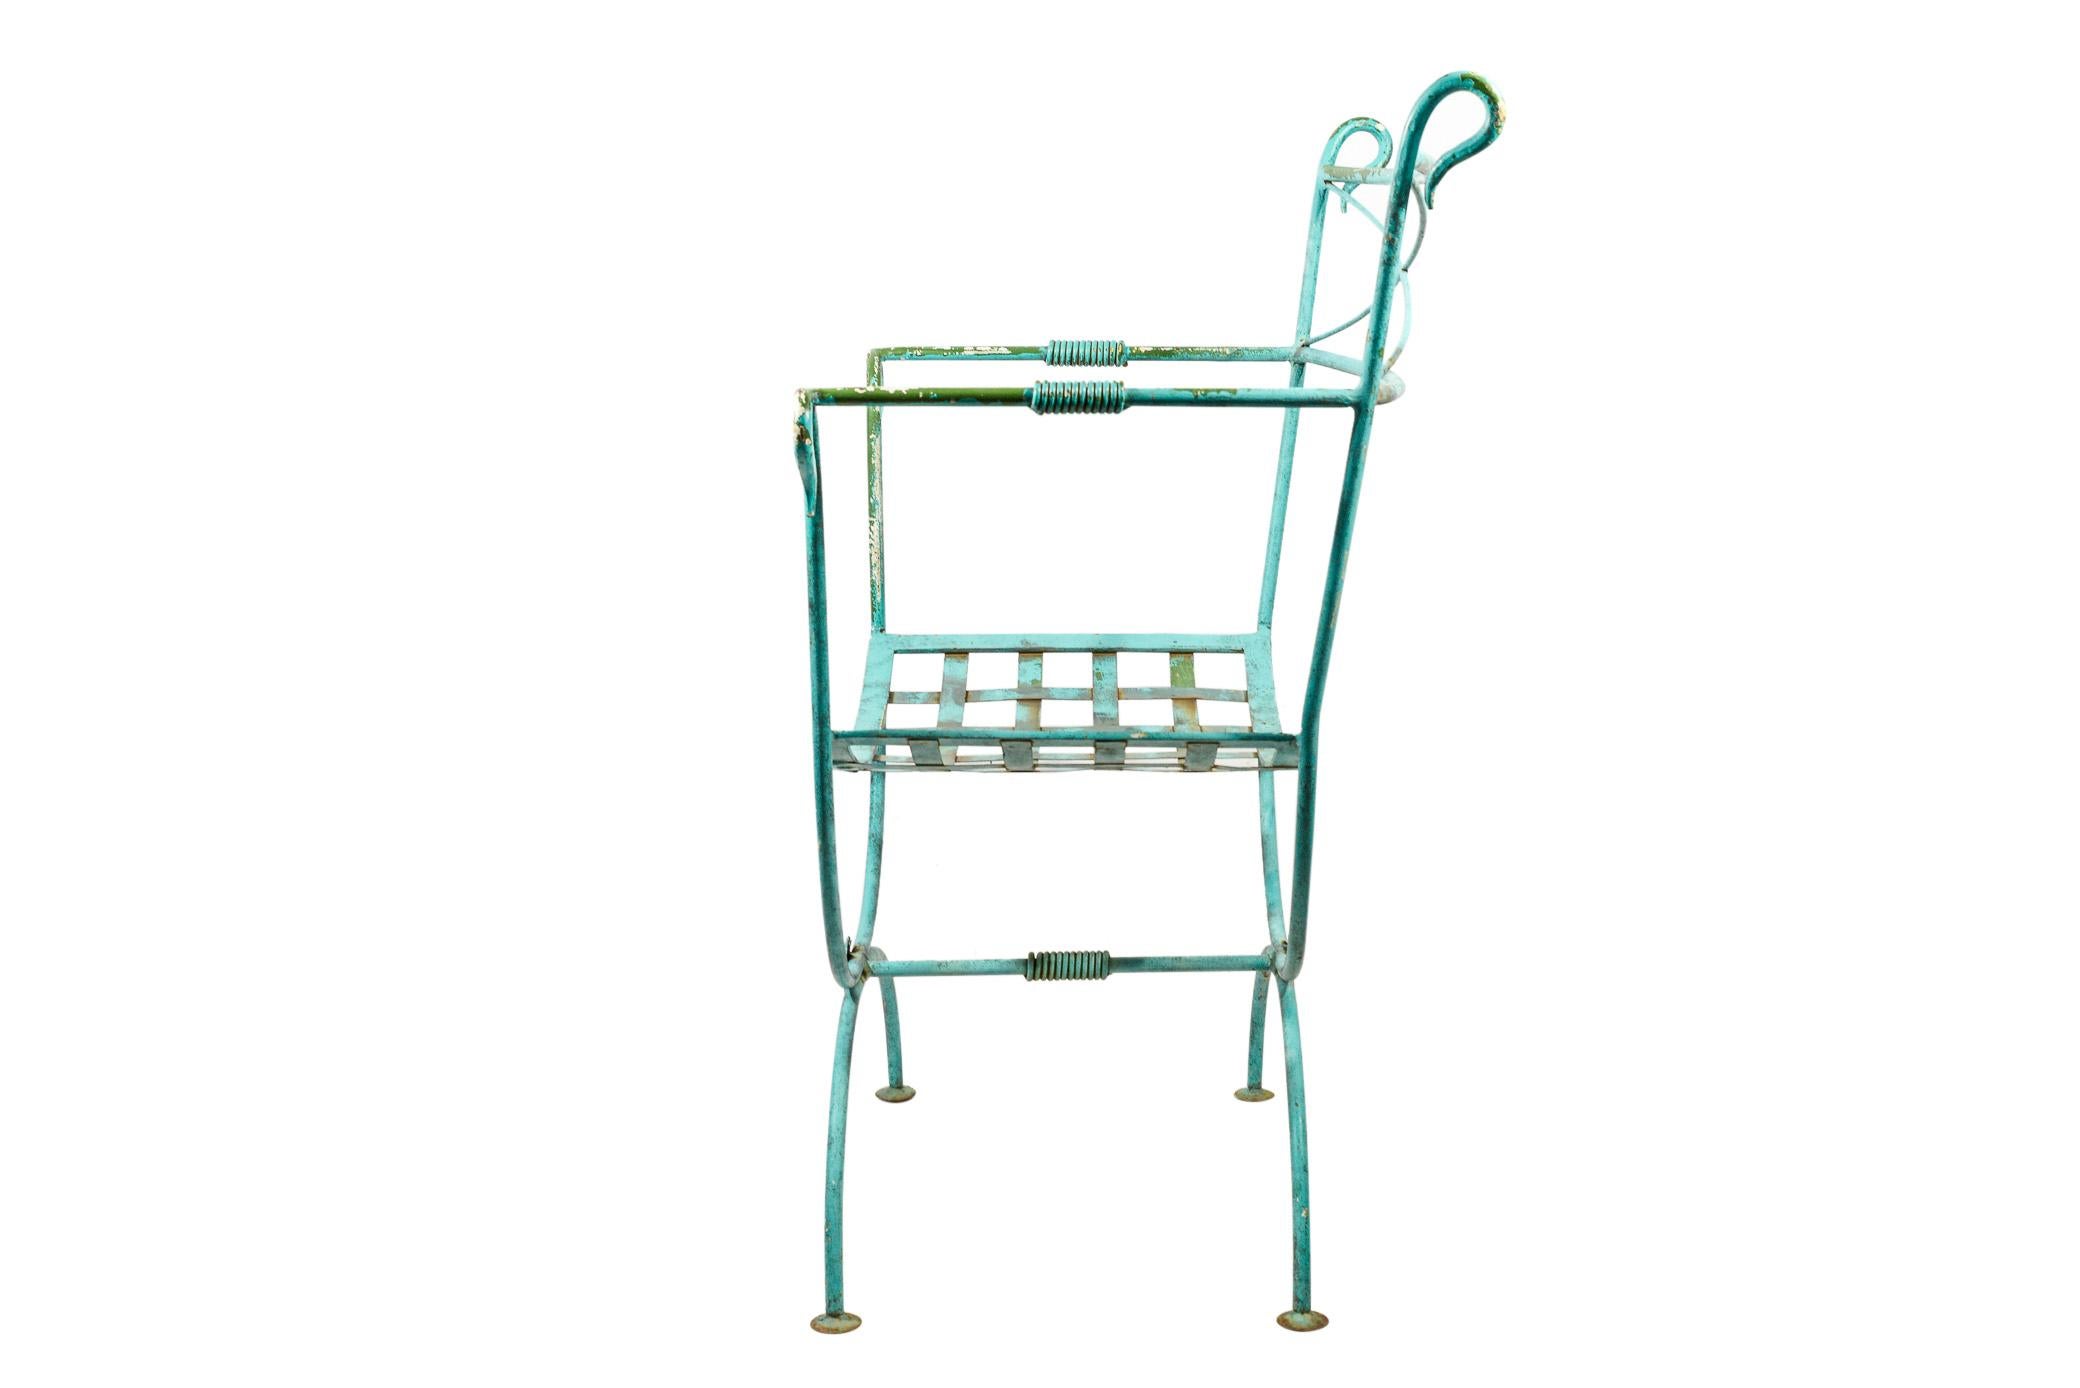 René Prou,
Set of four armchairs,
Iron, vintage condition,
France, circa 1960.

Measures: Height 92 cm, seat height 40 cm, width 64 cm, depth 50 cm.